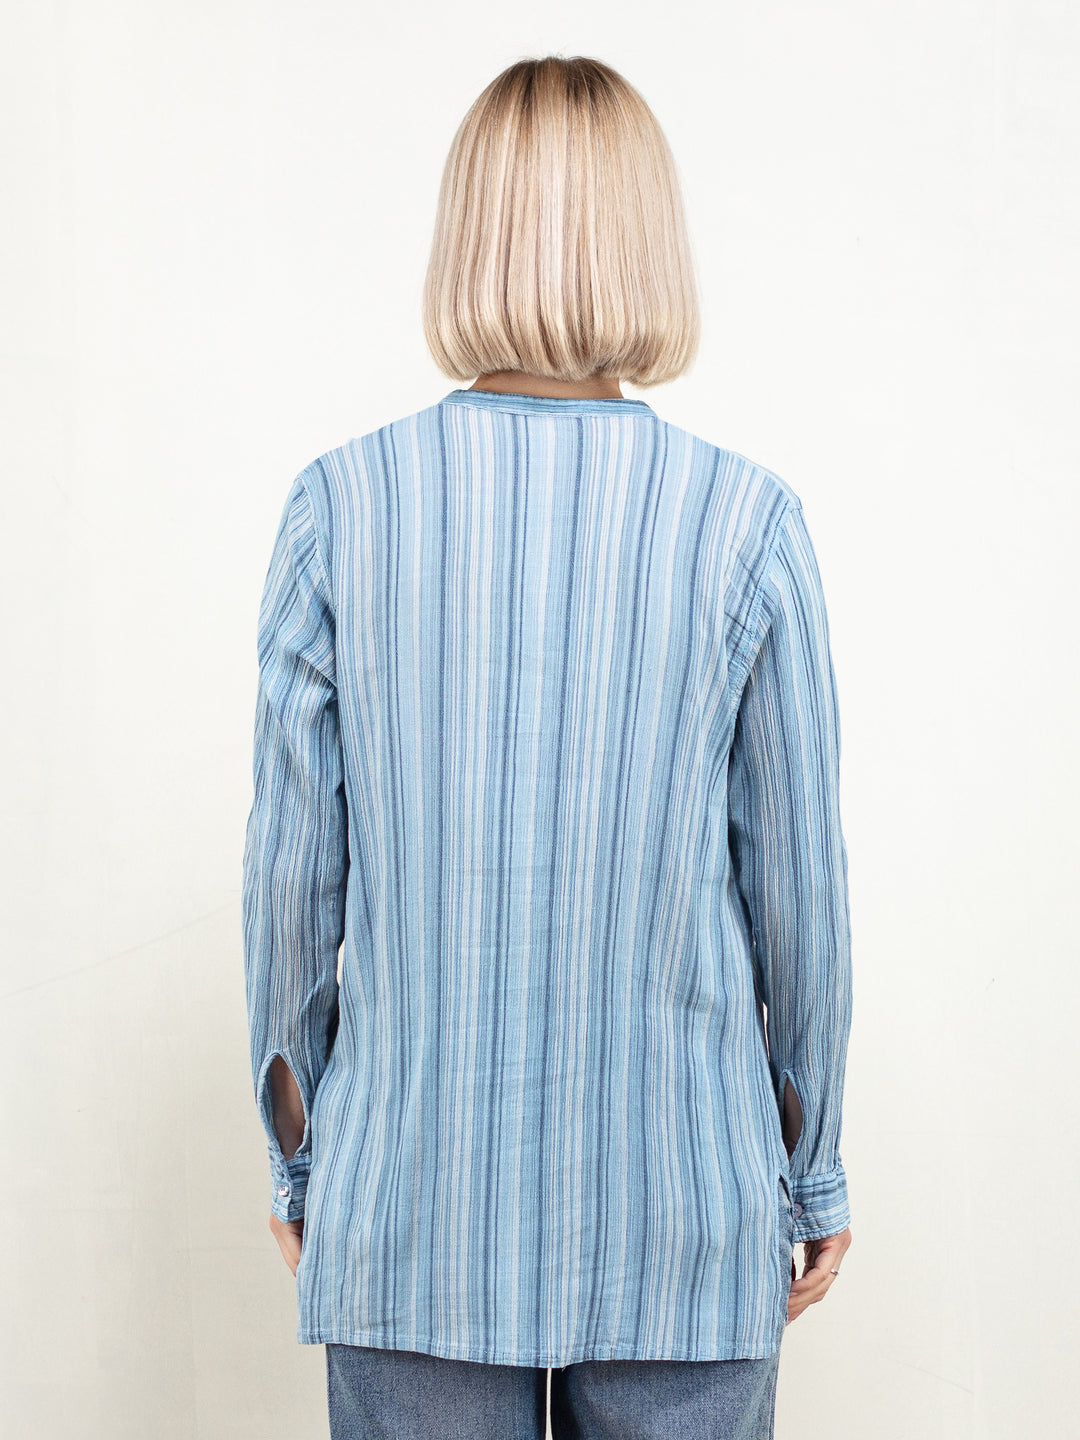 Striped Smock Shirt blue women pullover shirt collarless cotton artist minimalist women shirt 80s vintage clothing size medium